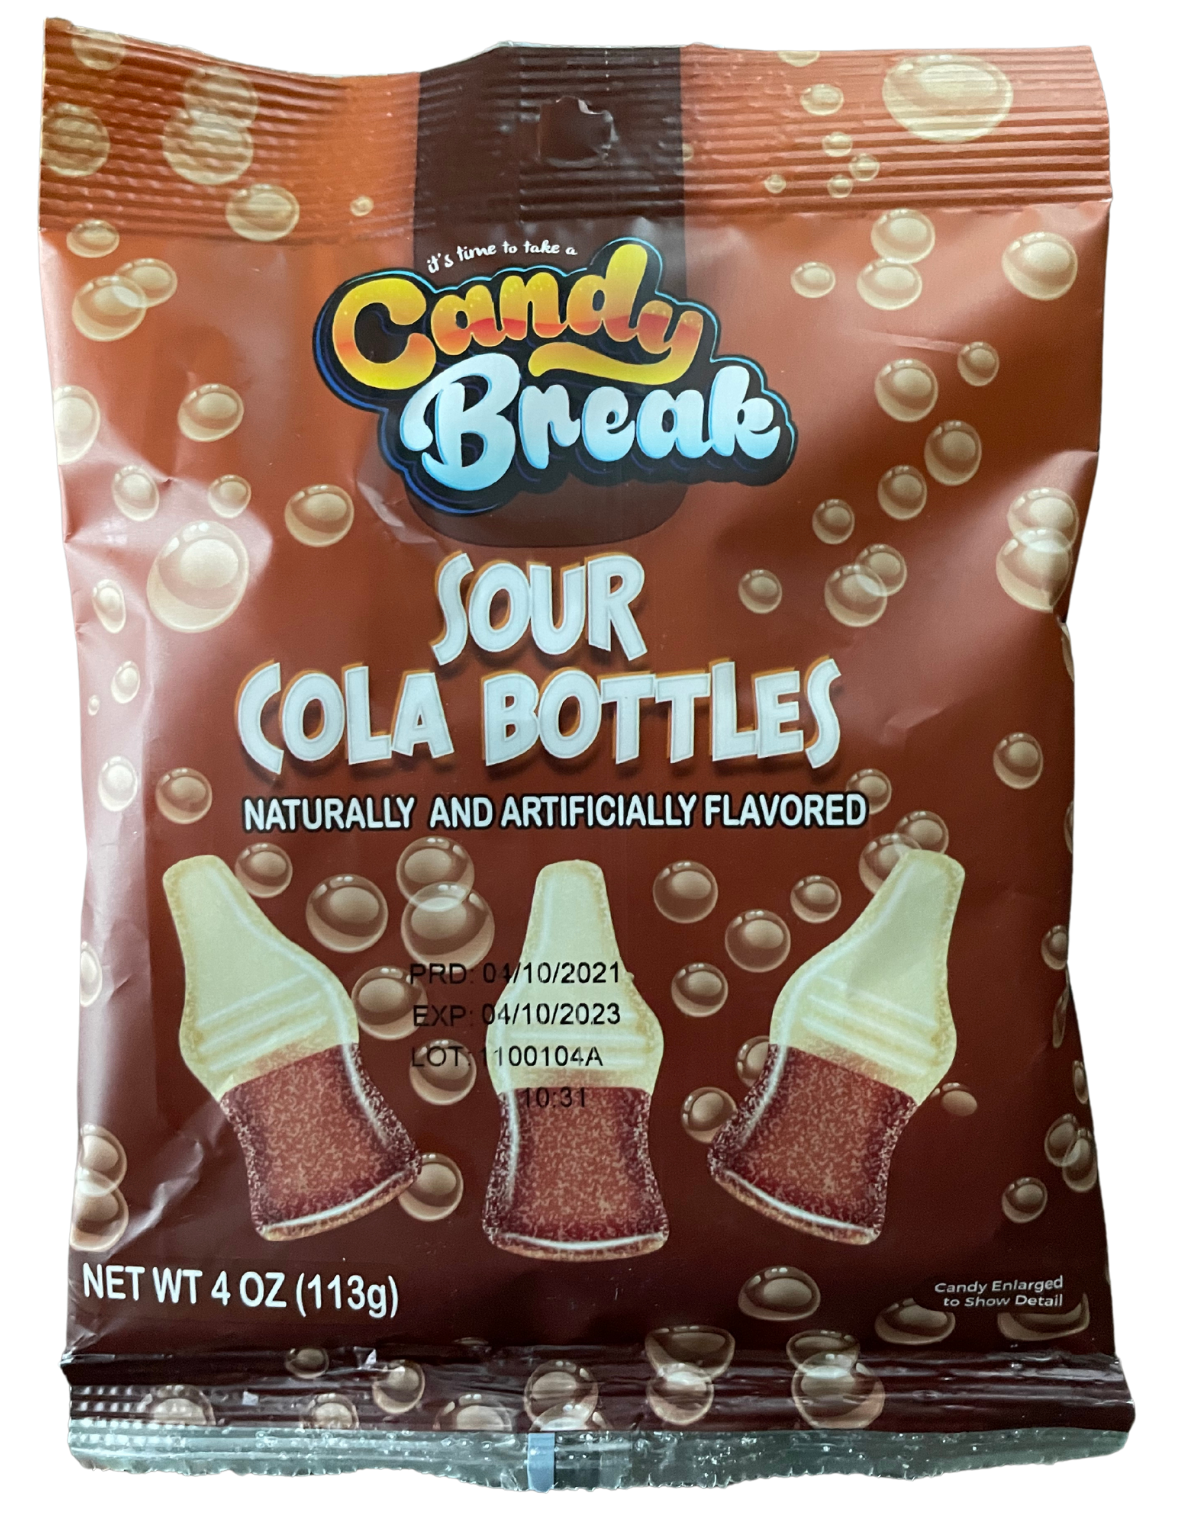 Candy Break Sour Cola Bottles